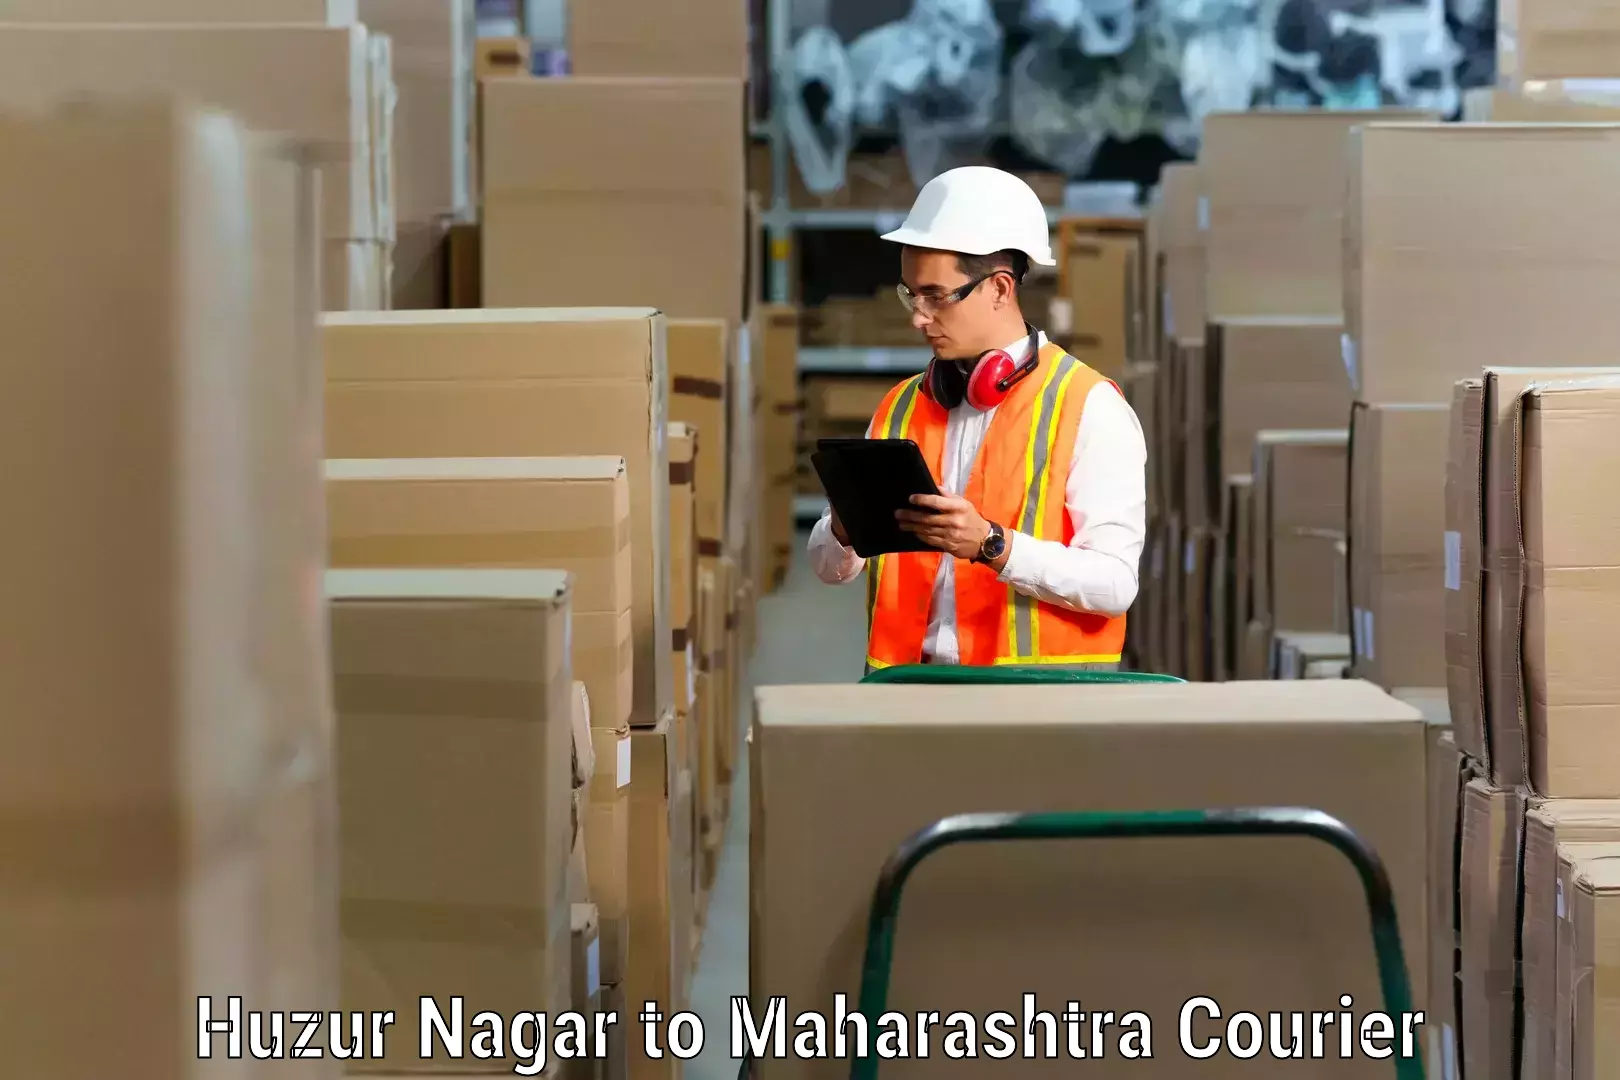 Residential moving experts Huzur Nagar to Vairag